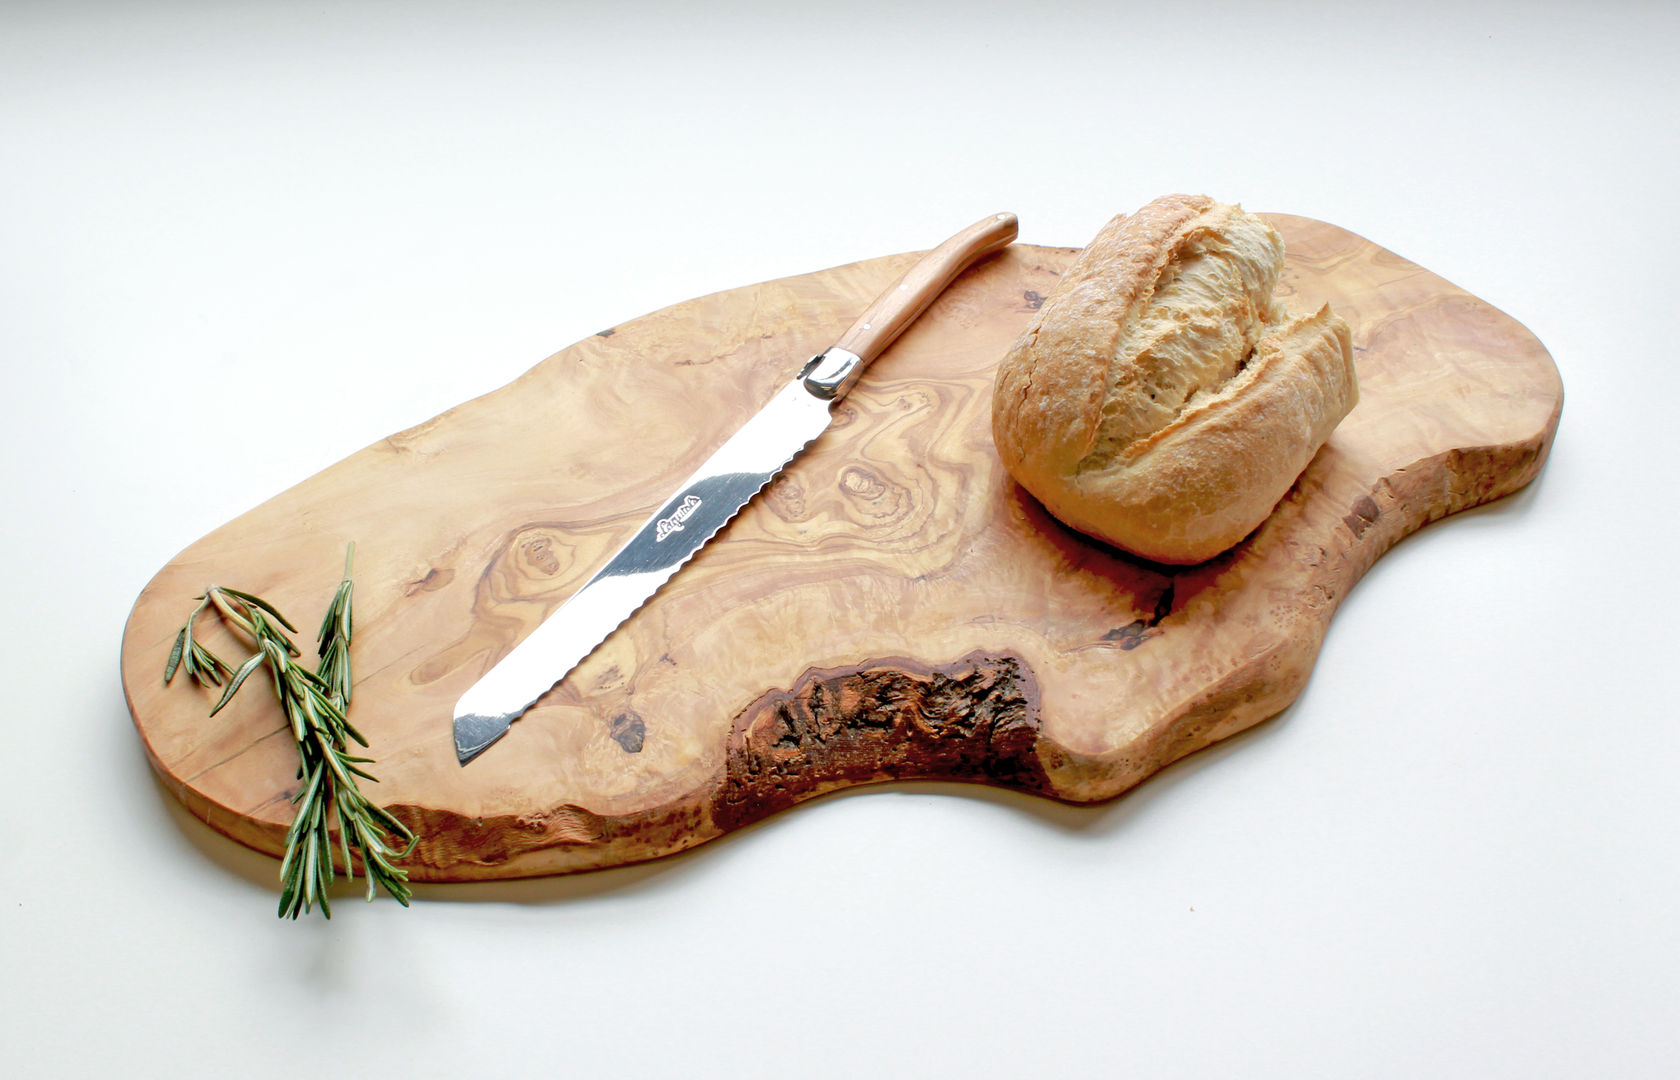 Large Rustic Olive Wood Serving Board, The Rustic Dish The Rustic Dish Кухня Кухонний посуд